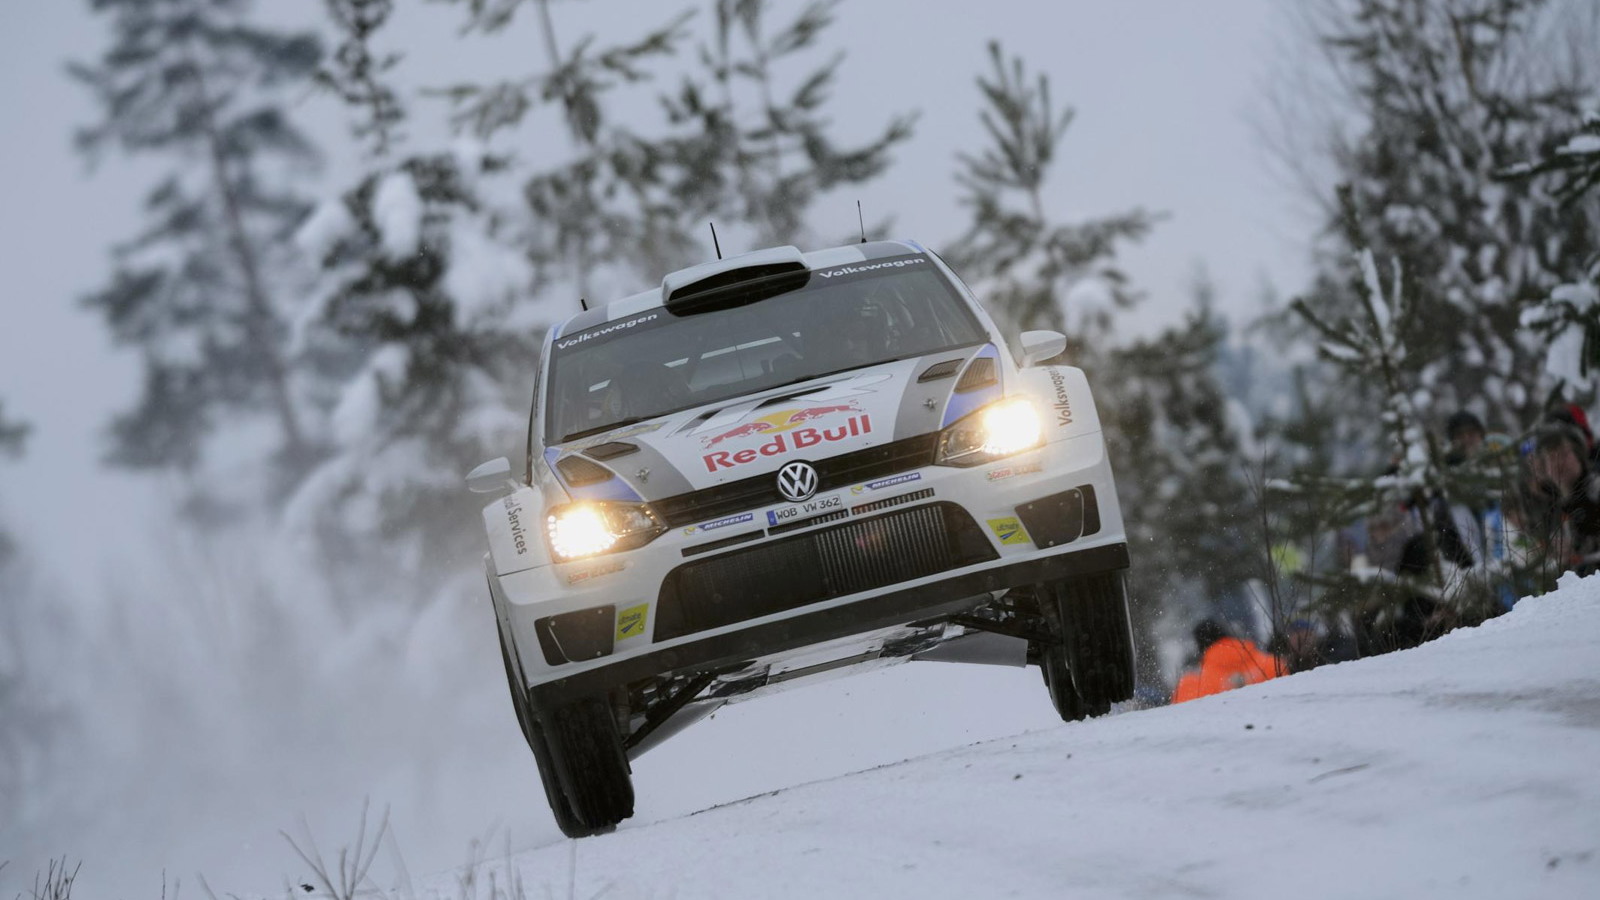 Volkswagen at the 2013 Rally Sweden